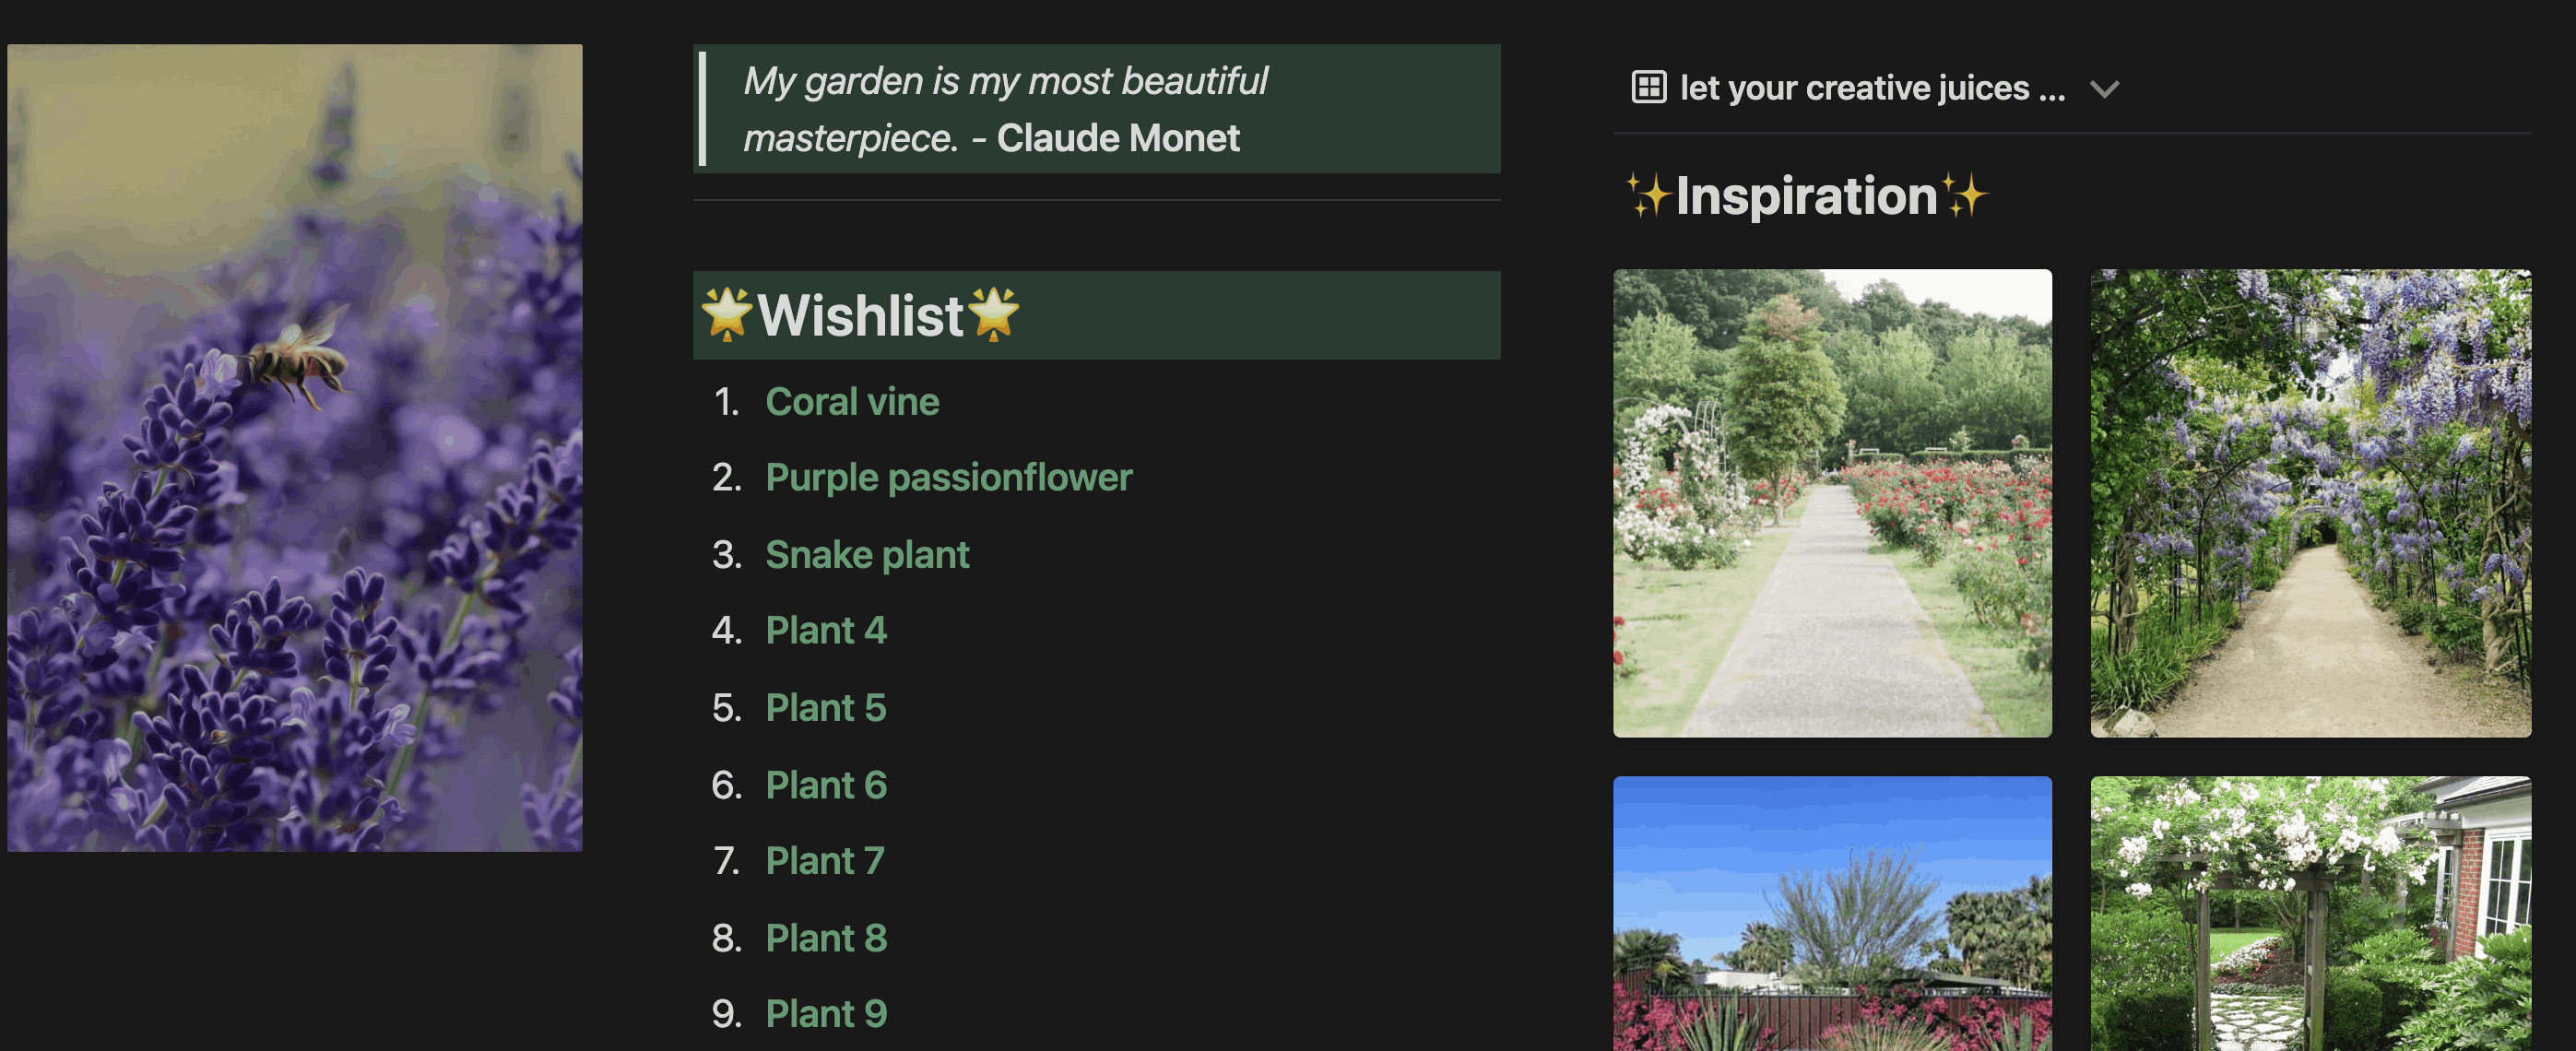 Plant Wishlist and inspiration image